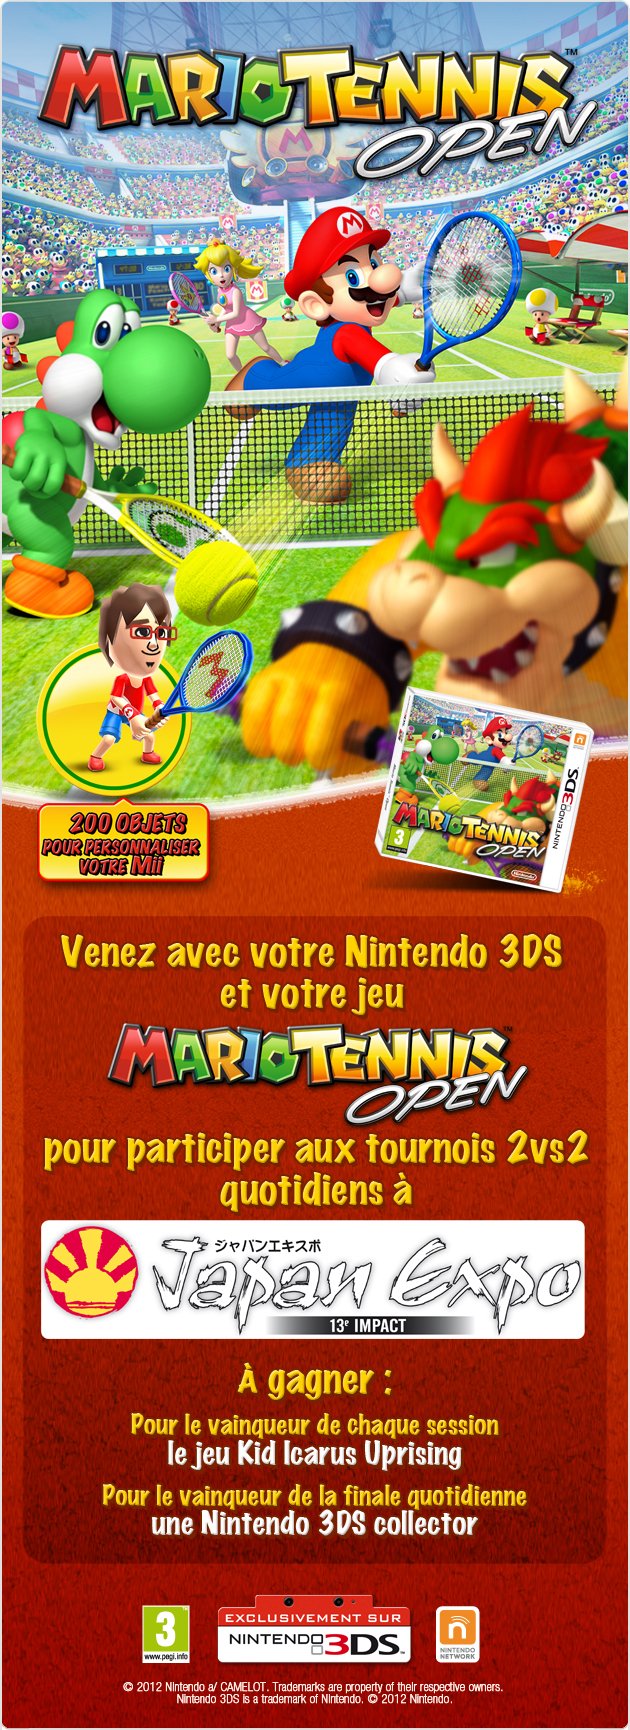 Mario tennis concours Nintendo 3DS Japan expo 02.07.2012